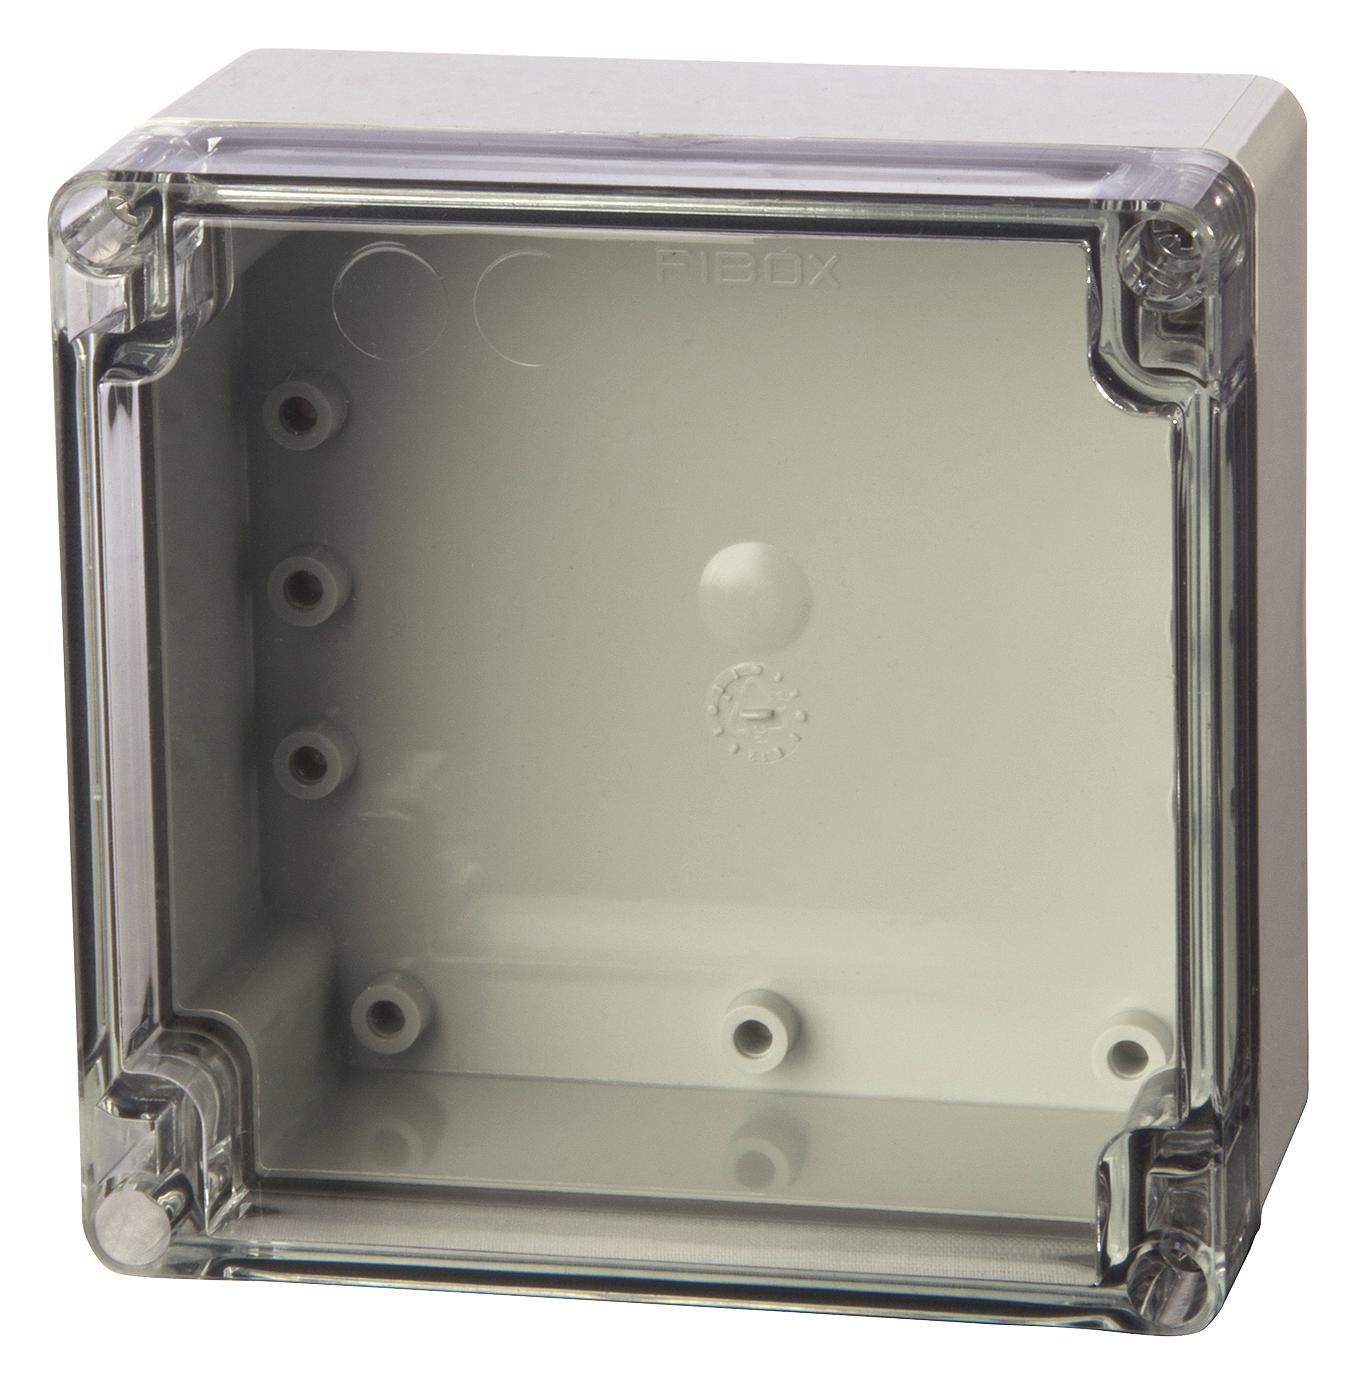 Fibox Ab 121210 Enclosure Enclosure, Multipurpose, Grey/clr, Abs